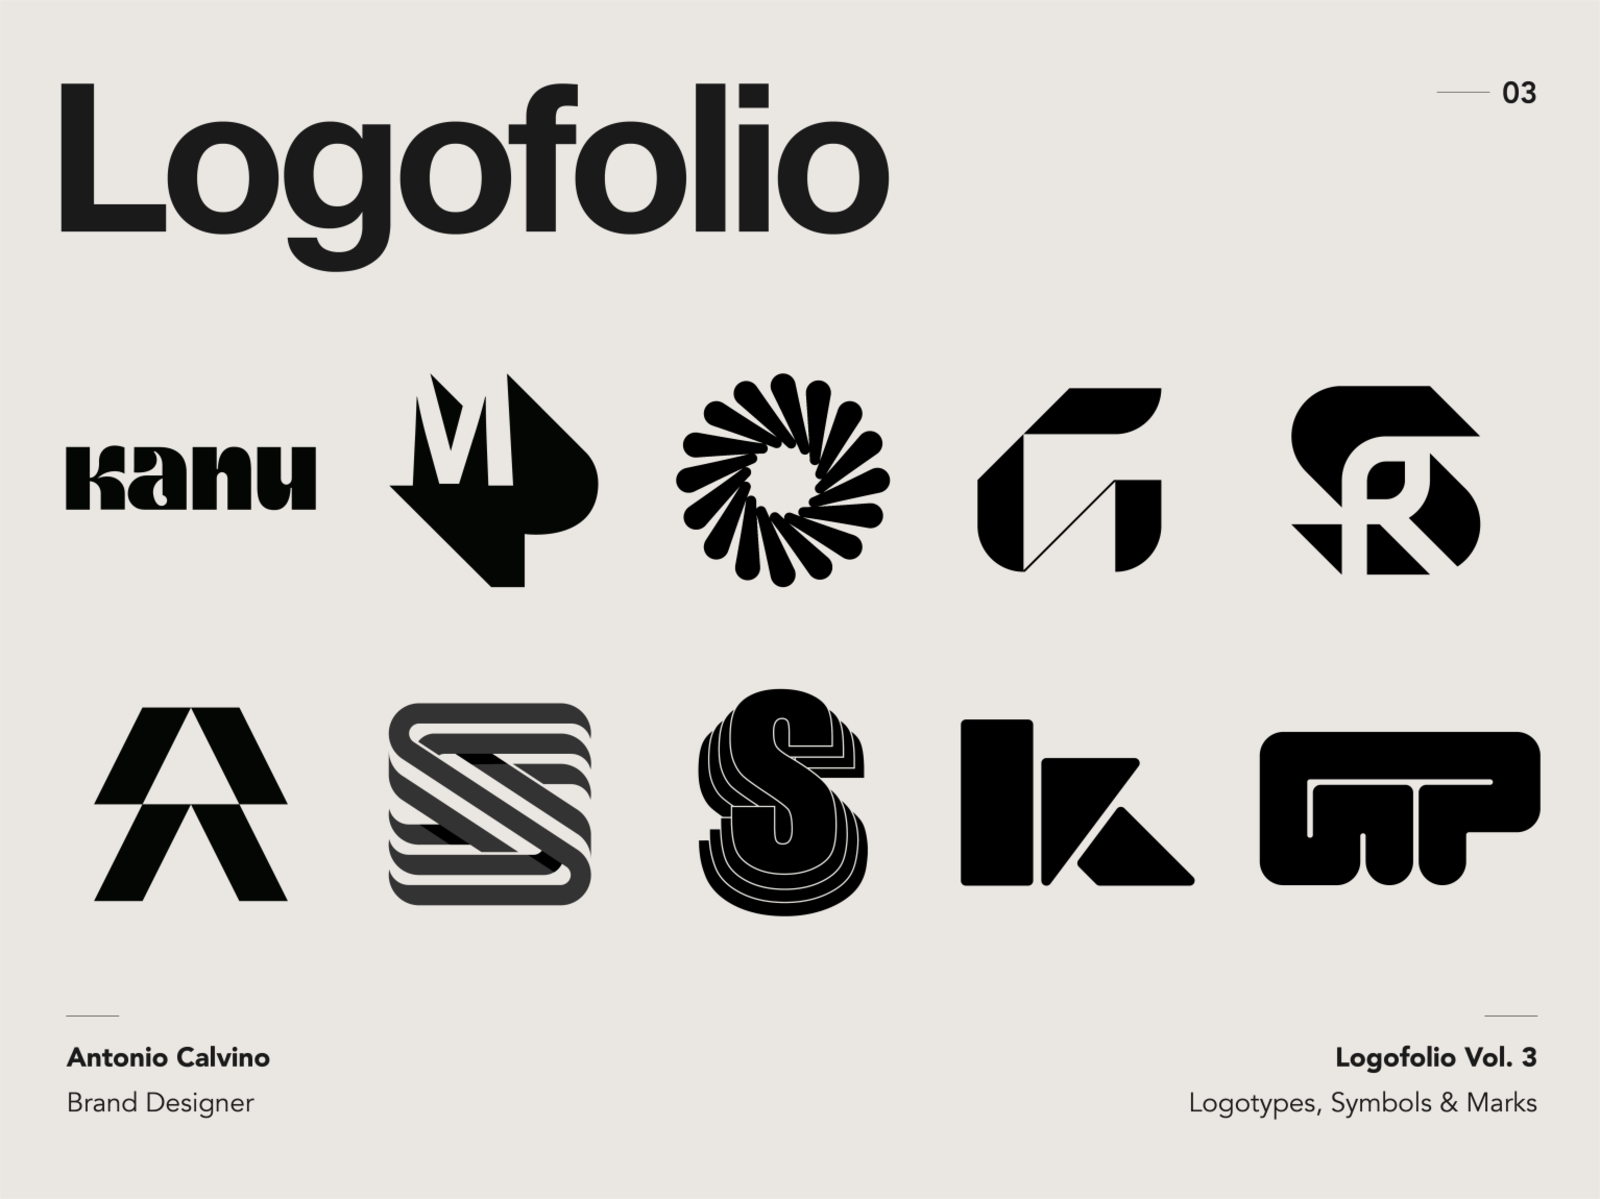 Logofolio Vol. 3 by Antonio Calvino